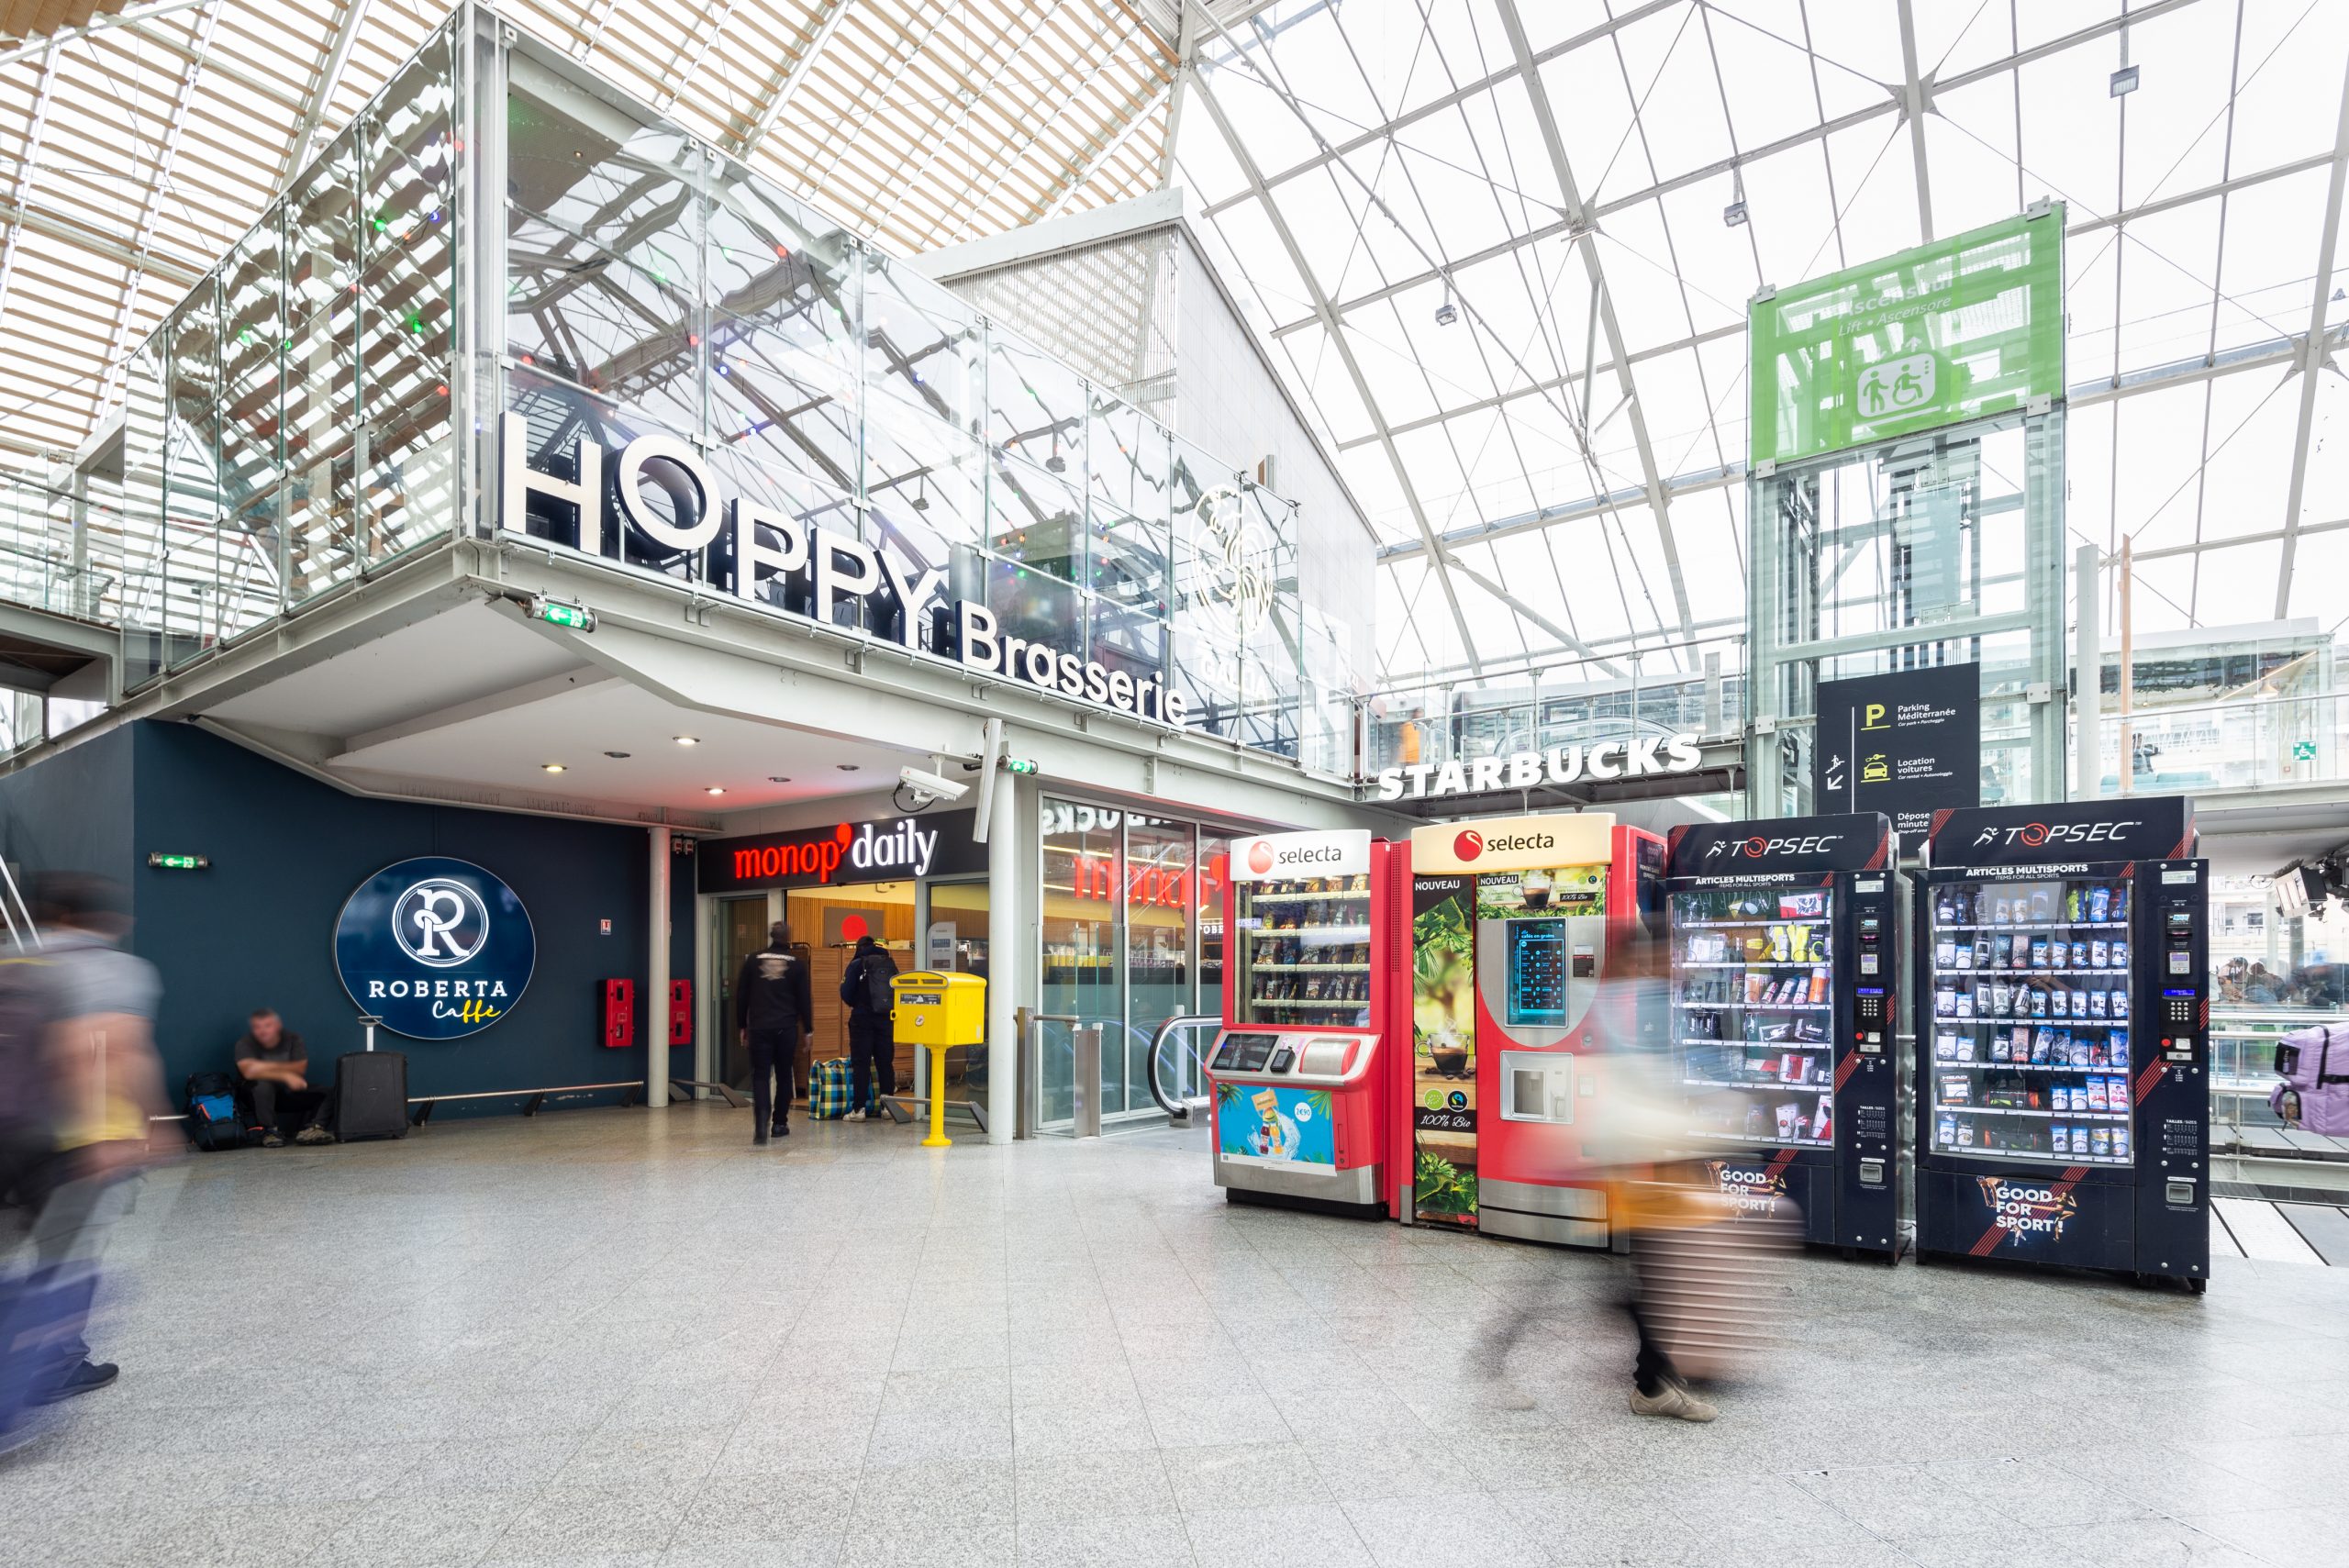 Hoppy Brasserie Gare de Lyon